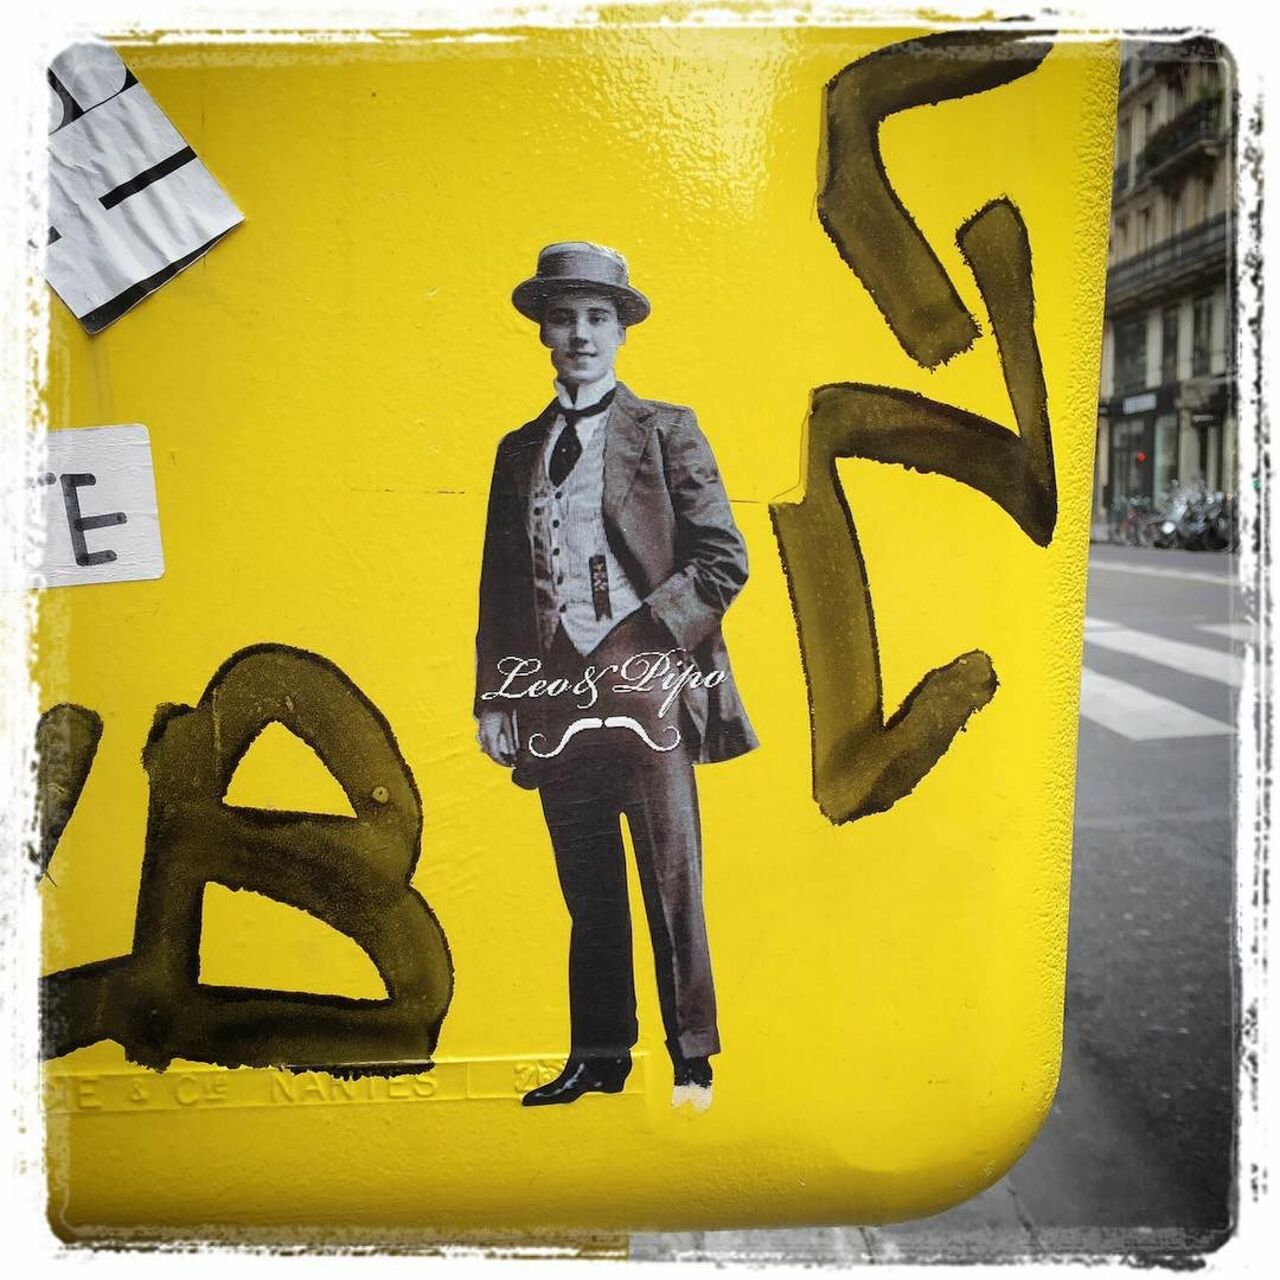 #Paris #graffiti photo by @gabyinparis http://ift.tt/1N0pO8X #StreetArt https://t.co/20J8Yg5l8w